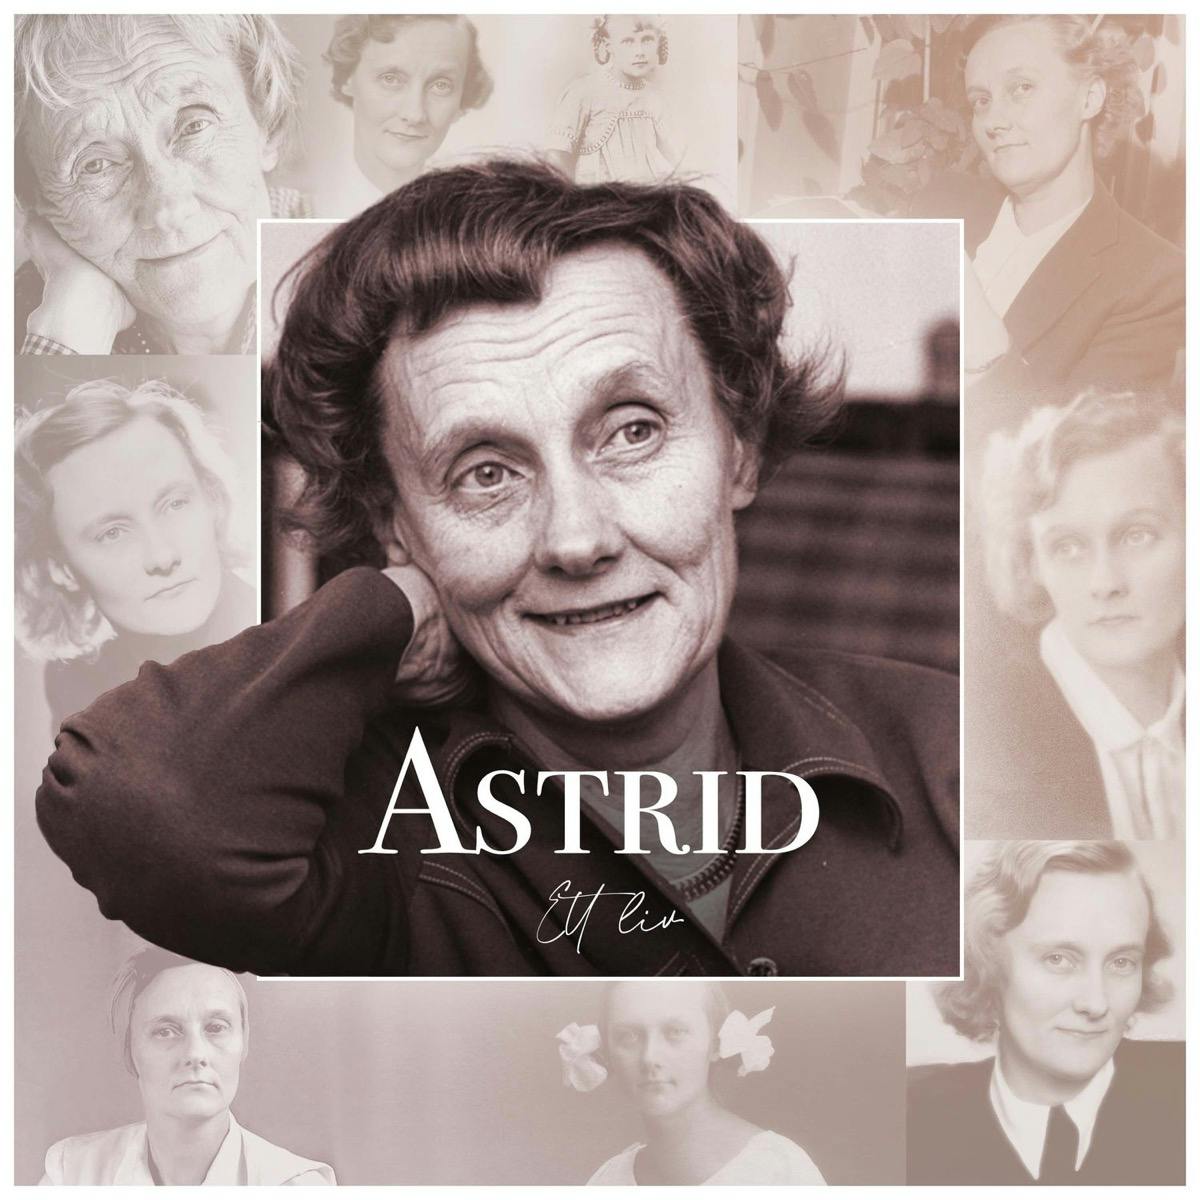 Astrid - ett liv podcast